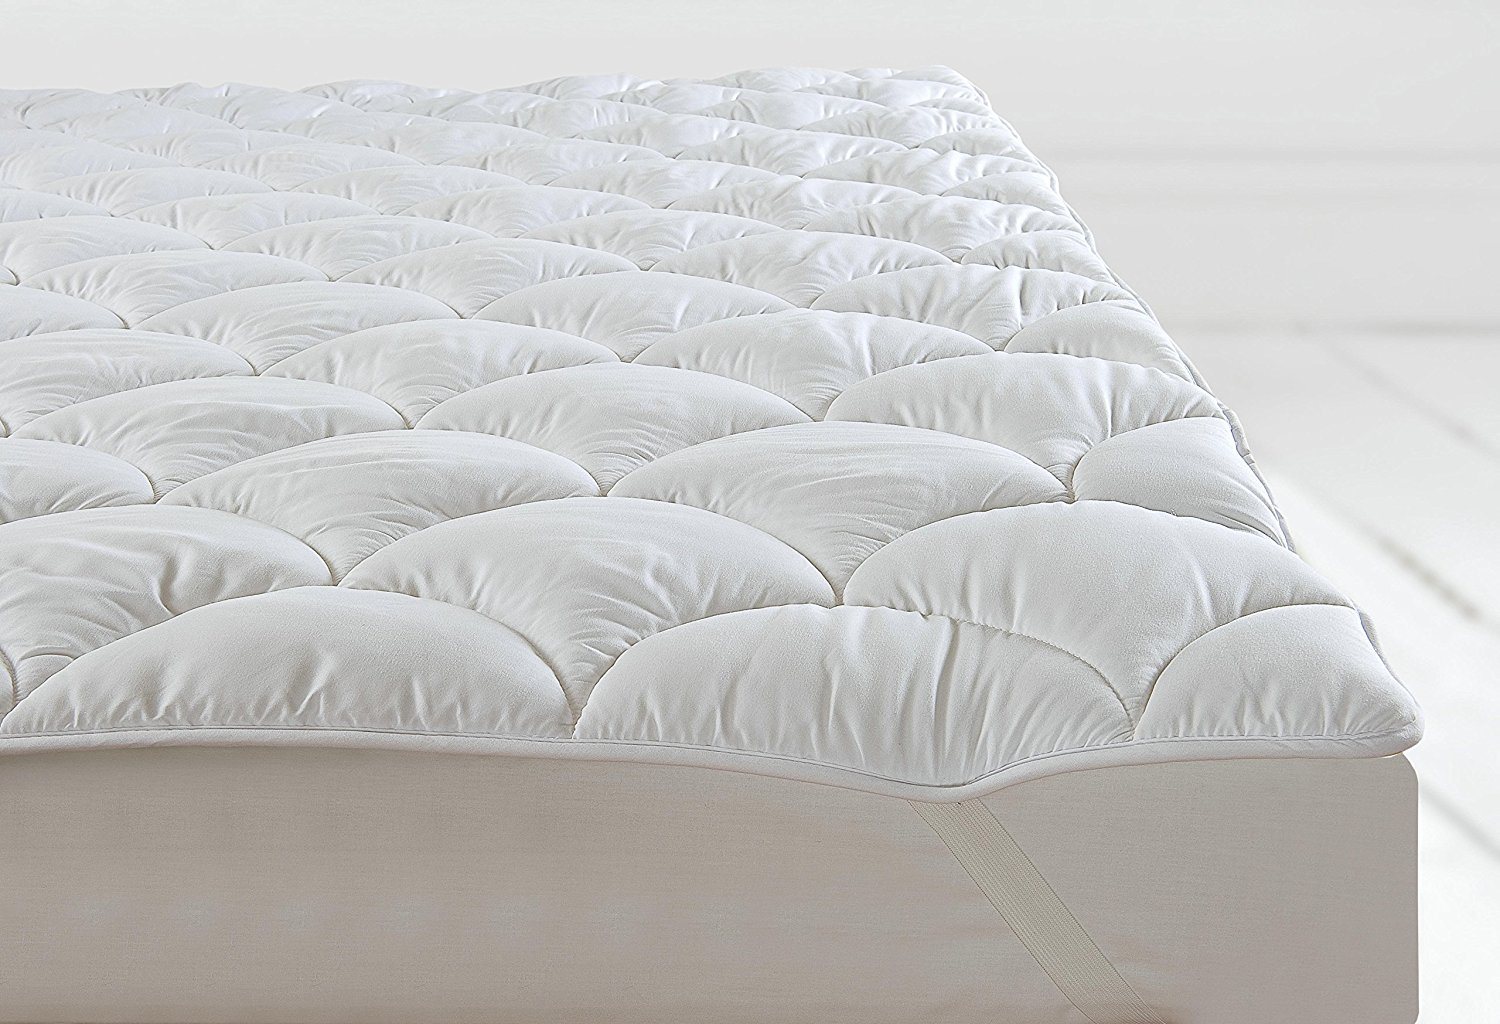 double bed mattress topper uk